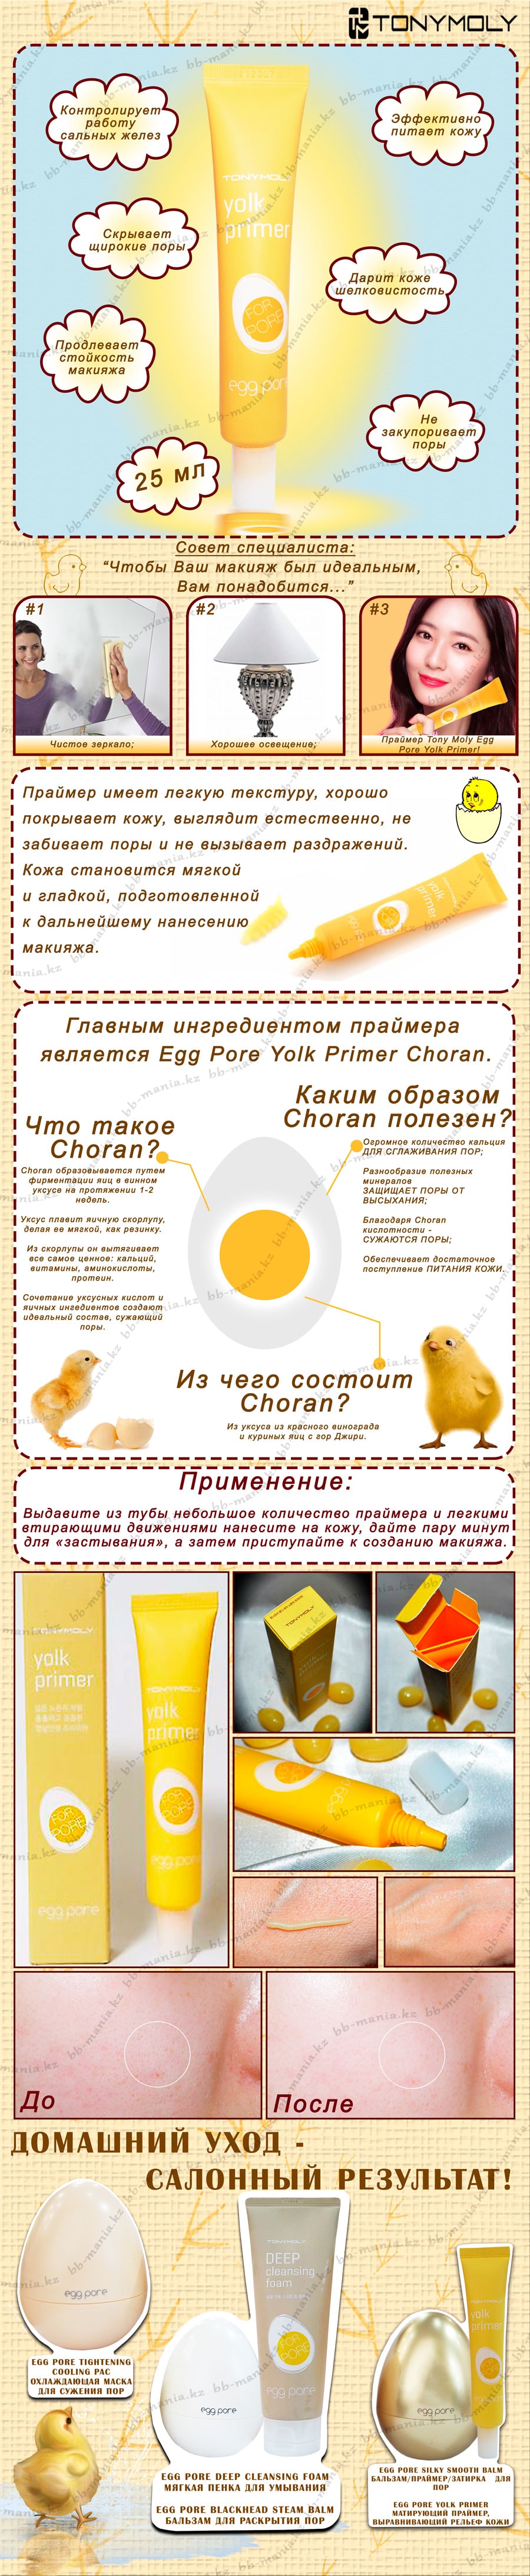 Egg-Pore-Yolk-Primer-[Tony-Moly]-min (1)